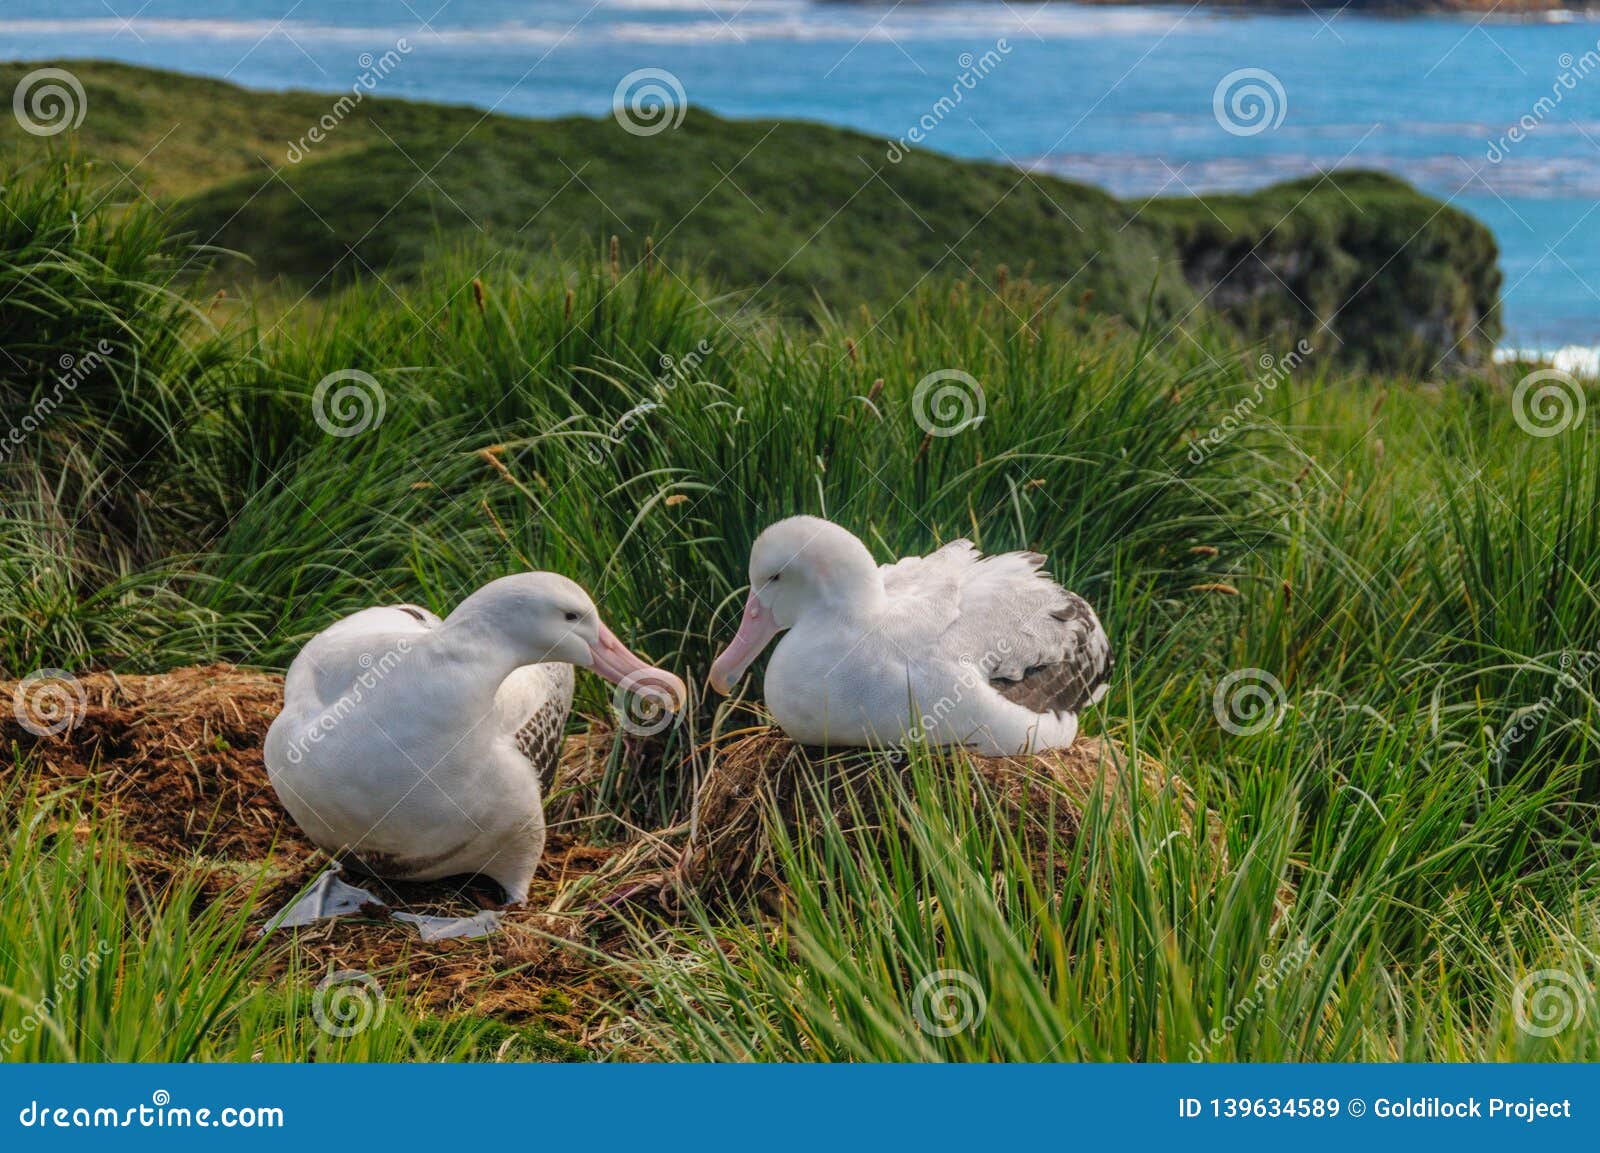 wandering albatross nesting behavior